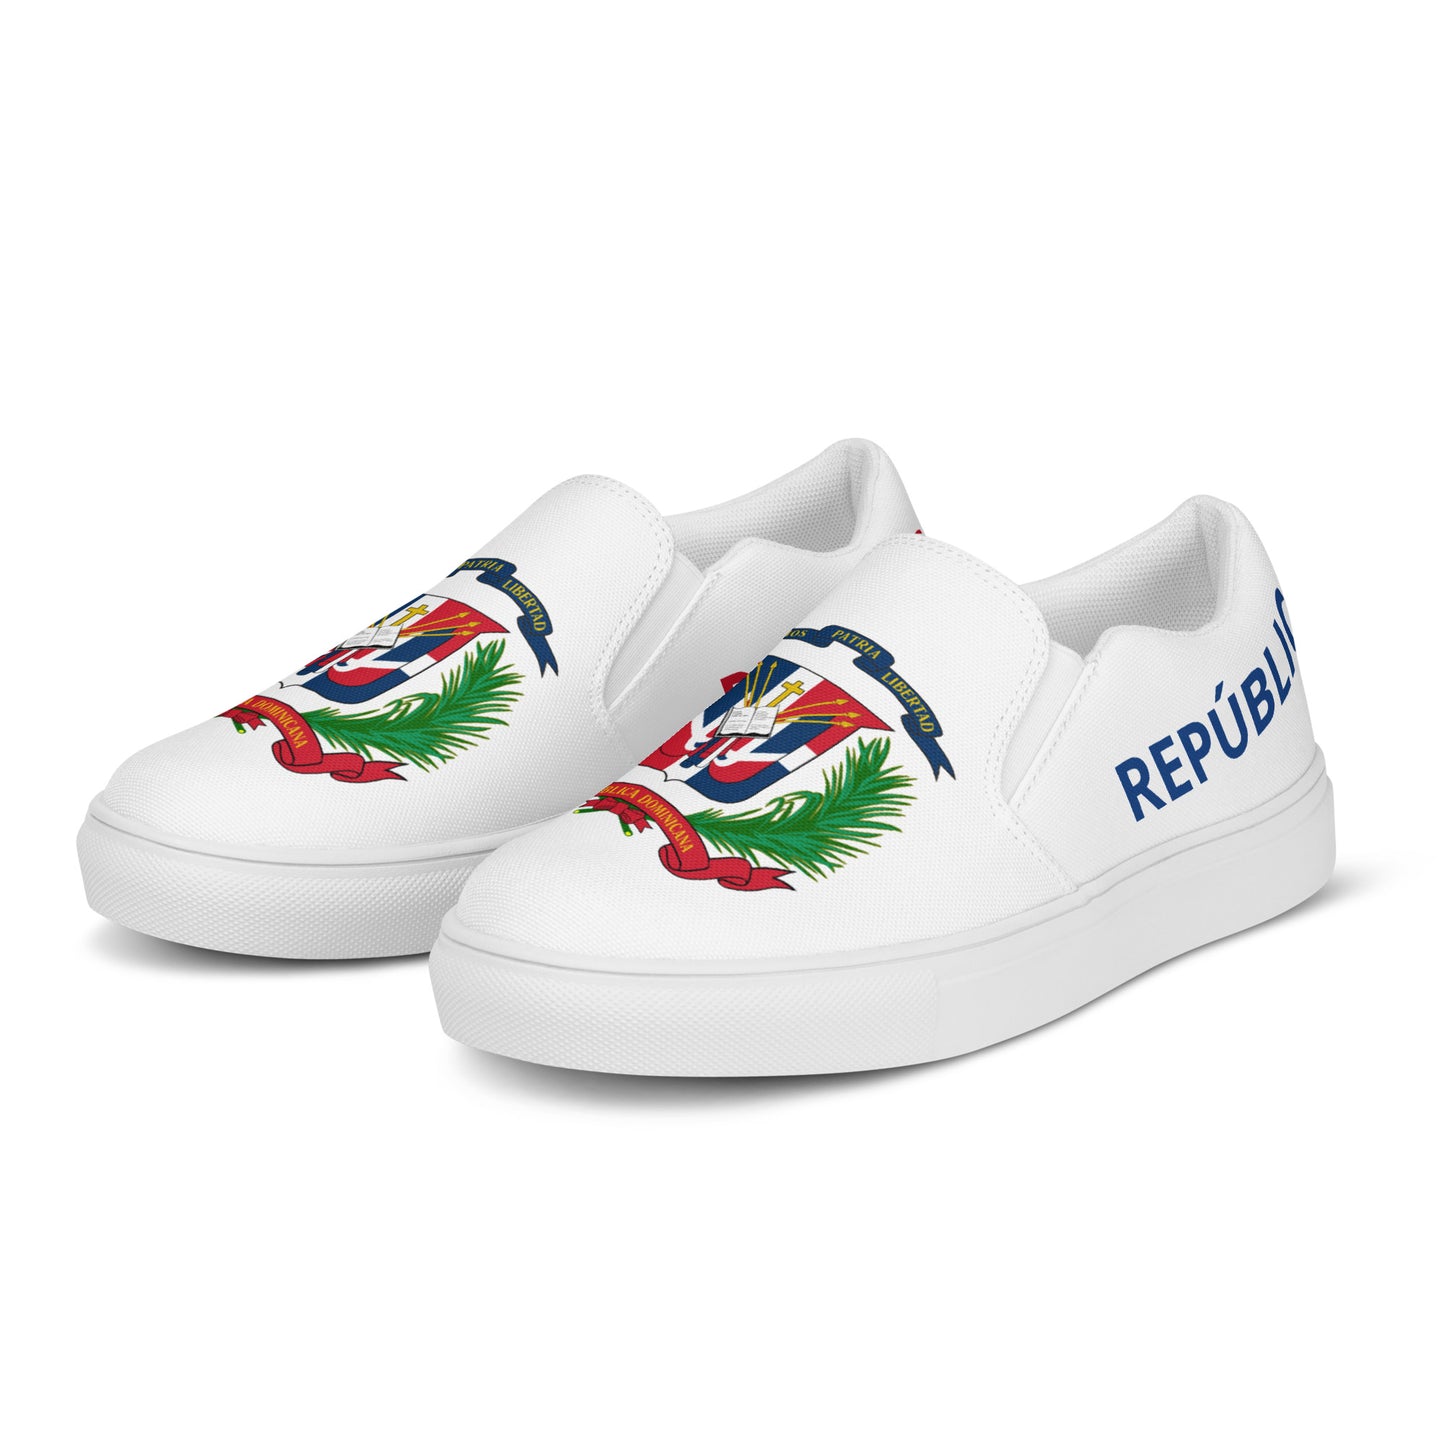 República Dominicana - Men - White - Slip-on shoes